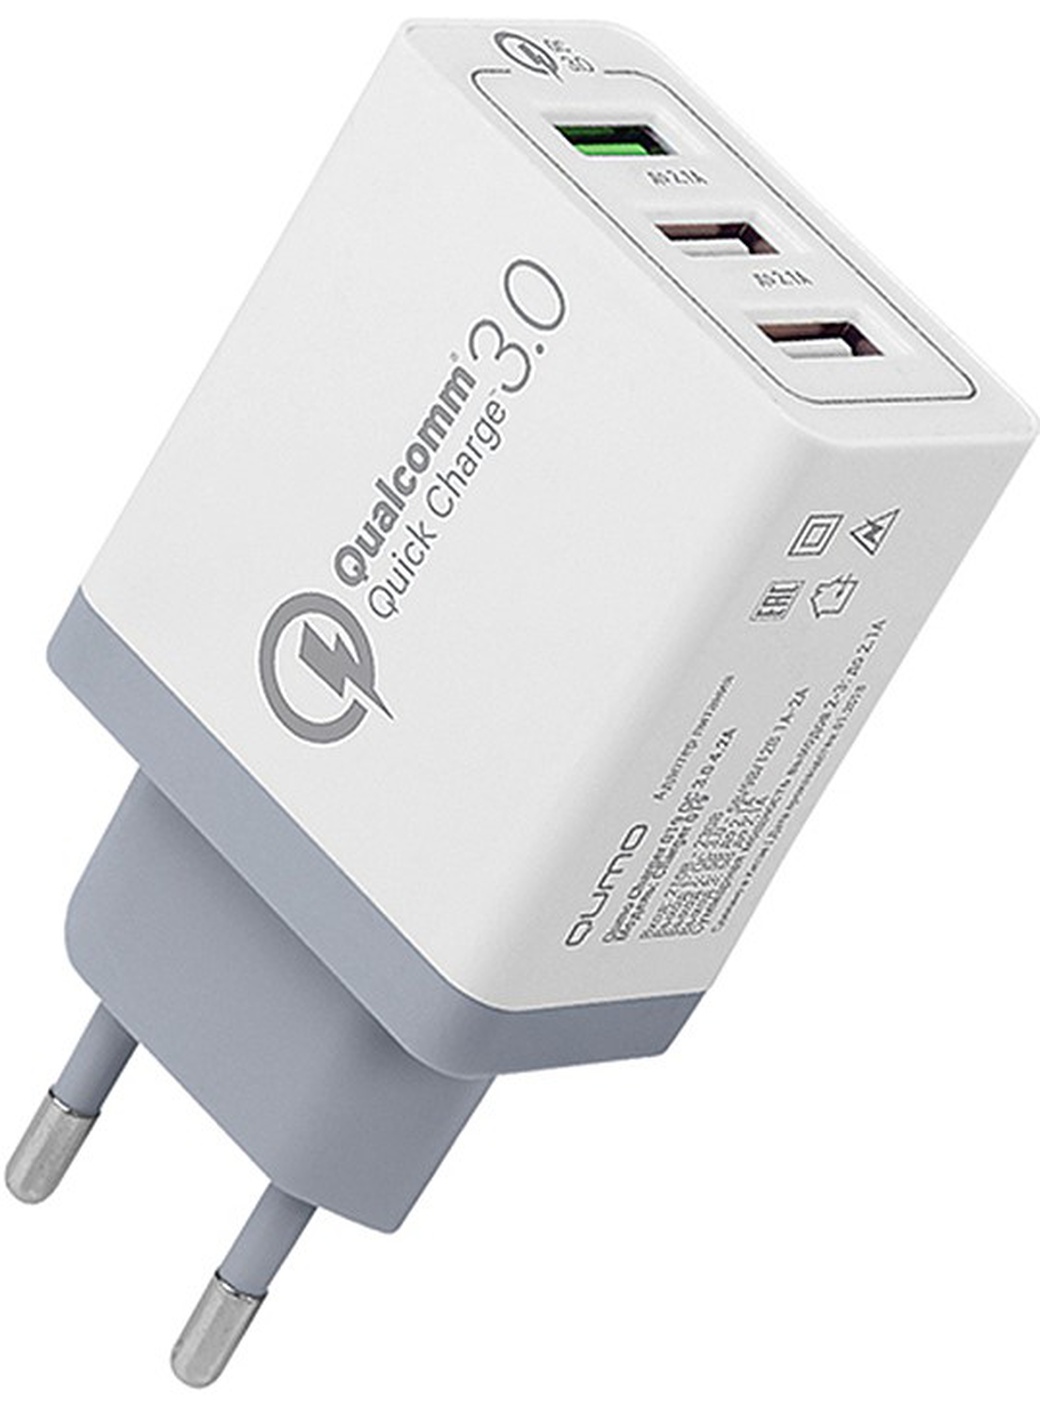 СЗУ адаптер Tech 3 USB (модель NQC-3A) Qick charge 3.0 белый, Redline фото